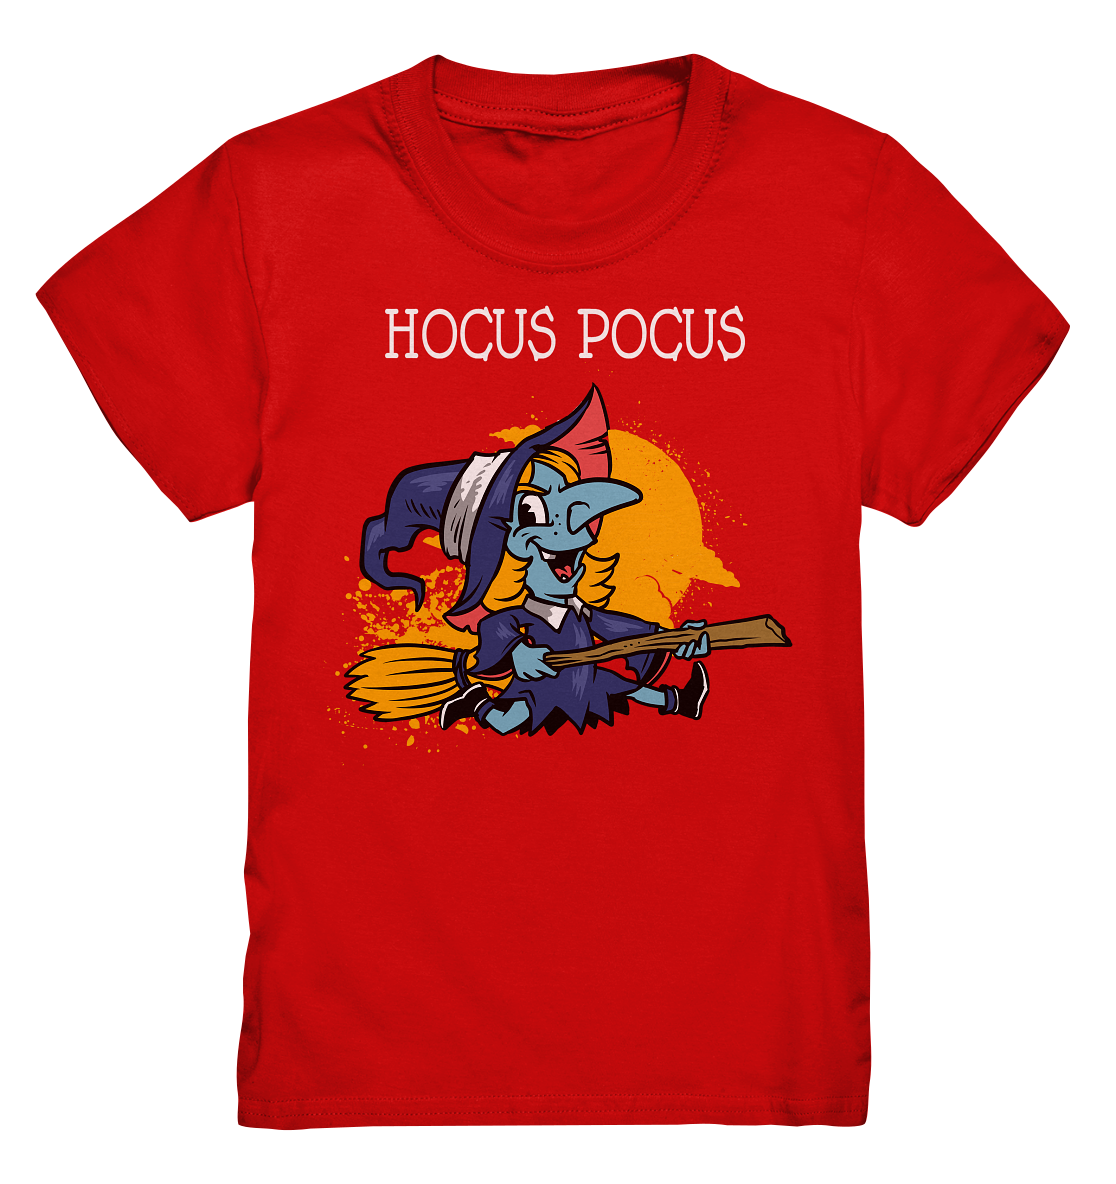 Hocus Pocus. Hexe auf Besen - Kids Premium Shirt